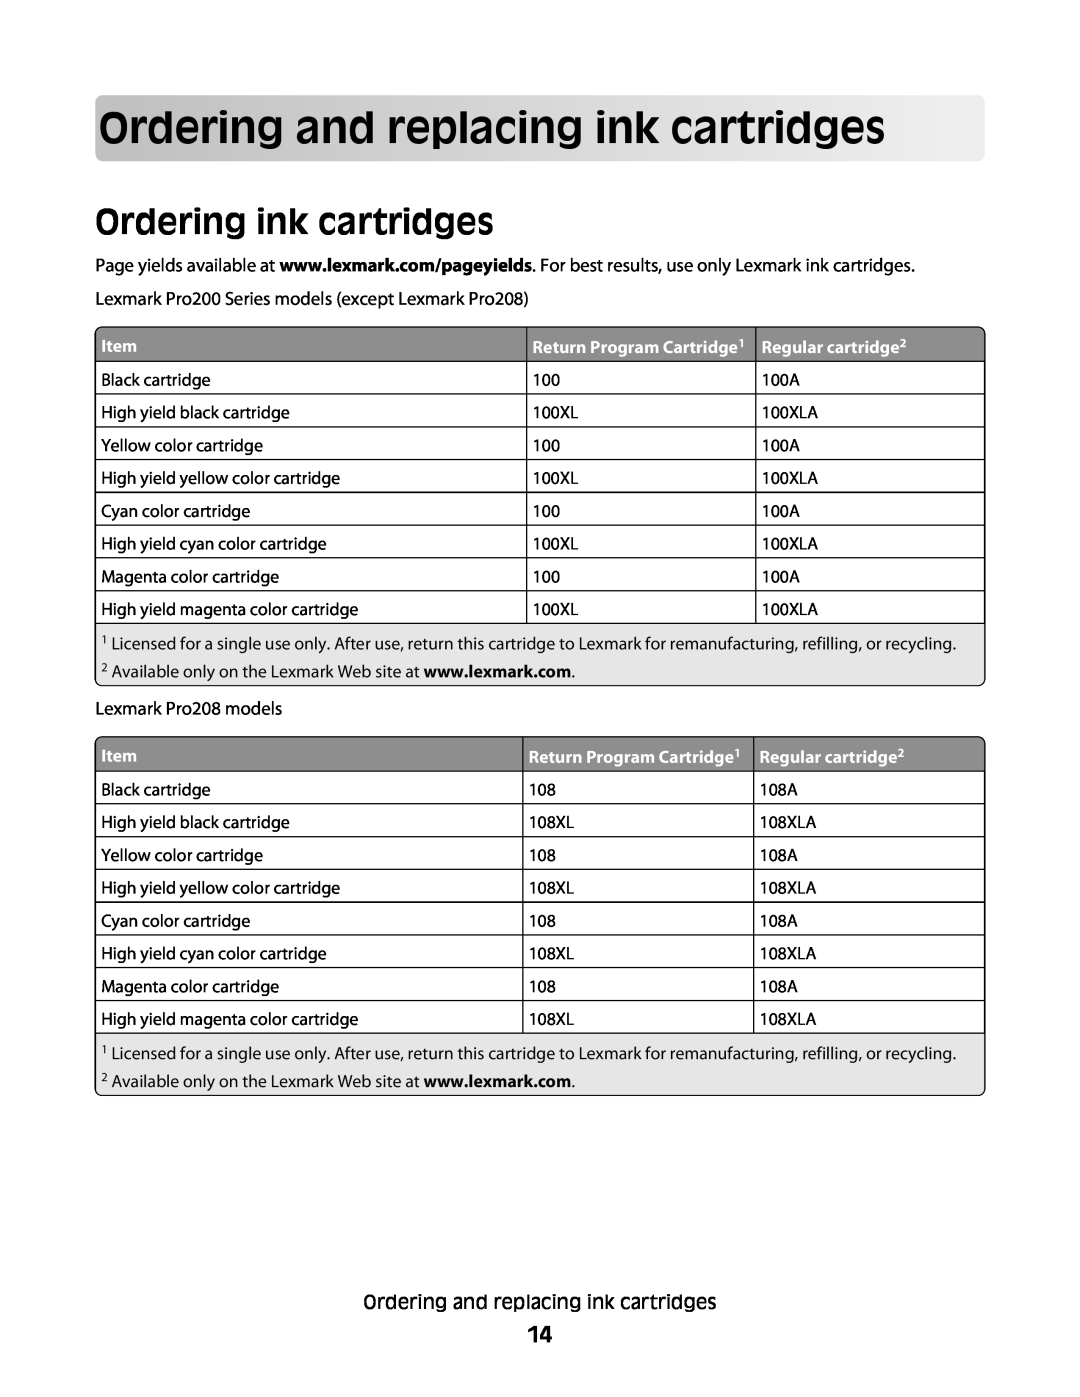 Lexmark Pro207 Orderingandreplacingink cartridges, Ordering ink cartridges, Return Program Cartridge1, Regular cartridge2 